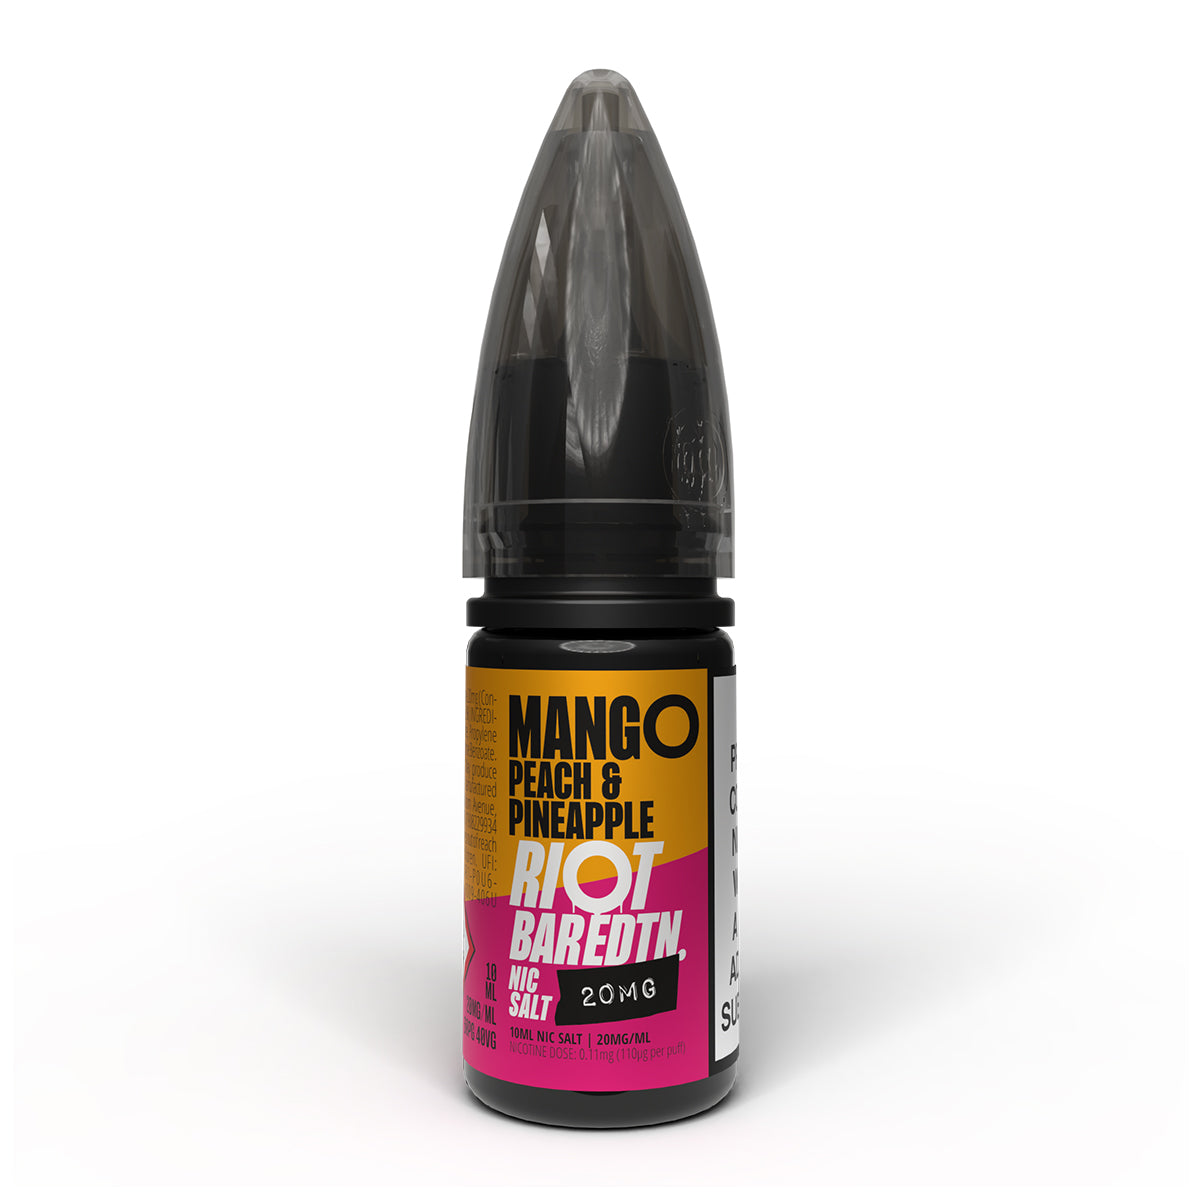 Mango Peach & Pineapple 10ml Nicotine Salt 20mg by Riot Bar Edtn